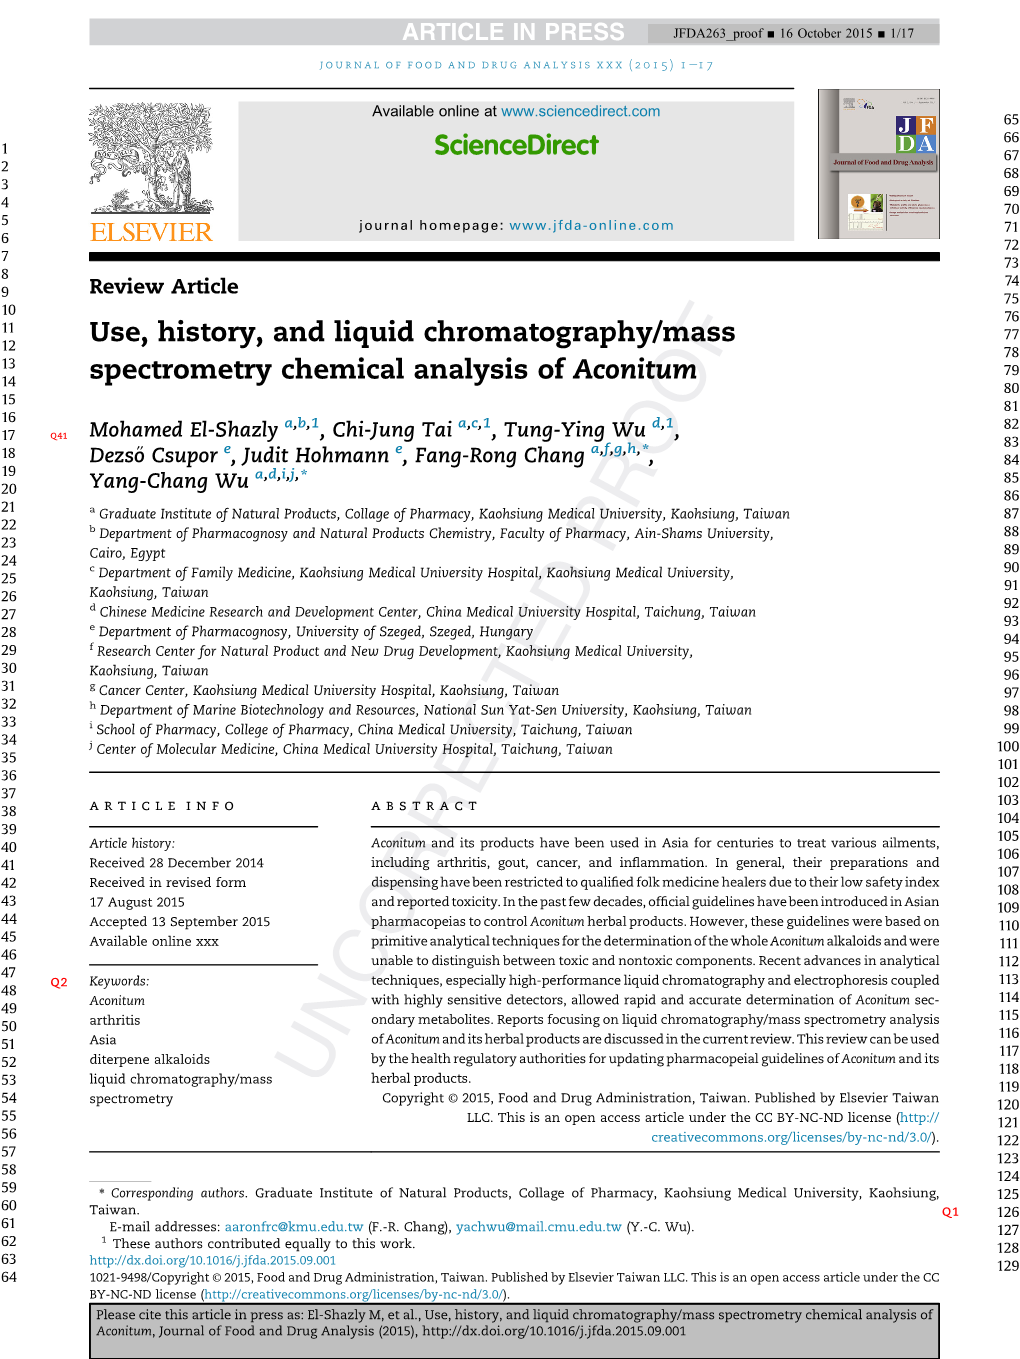 Use, History, and Liquid Chromatography/Mass Spectrometry Chemical Analysis of Aconitum